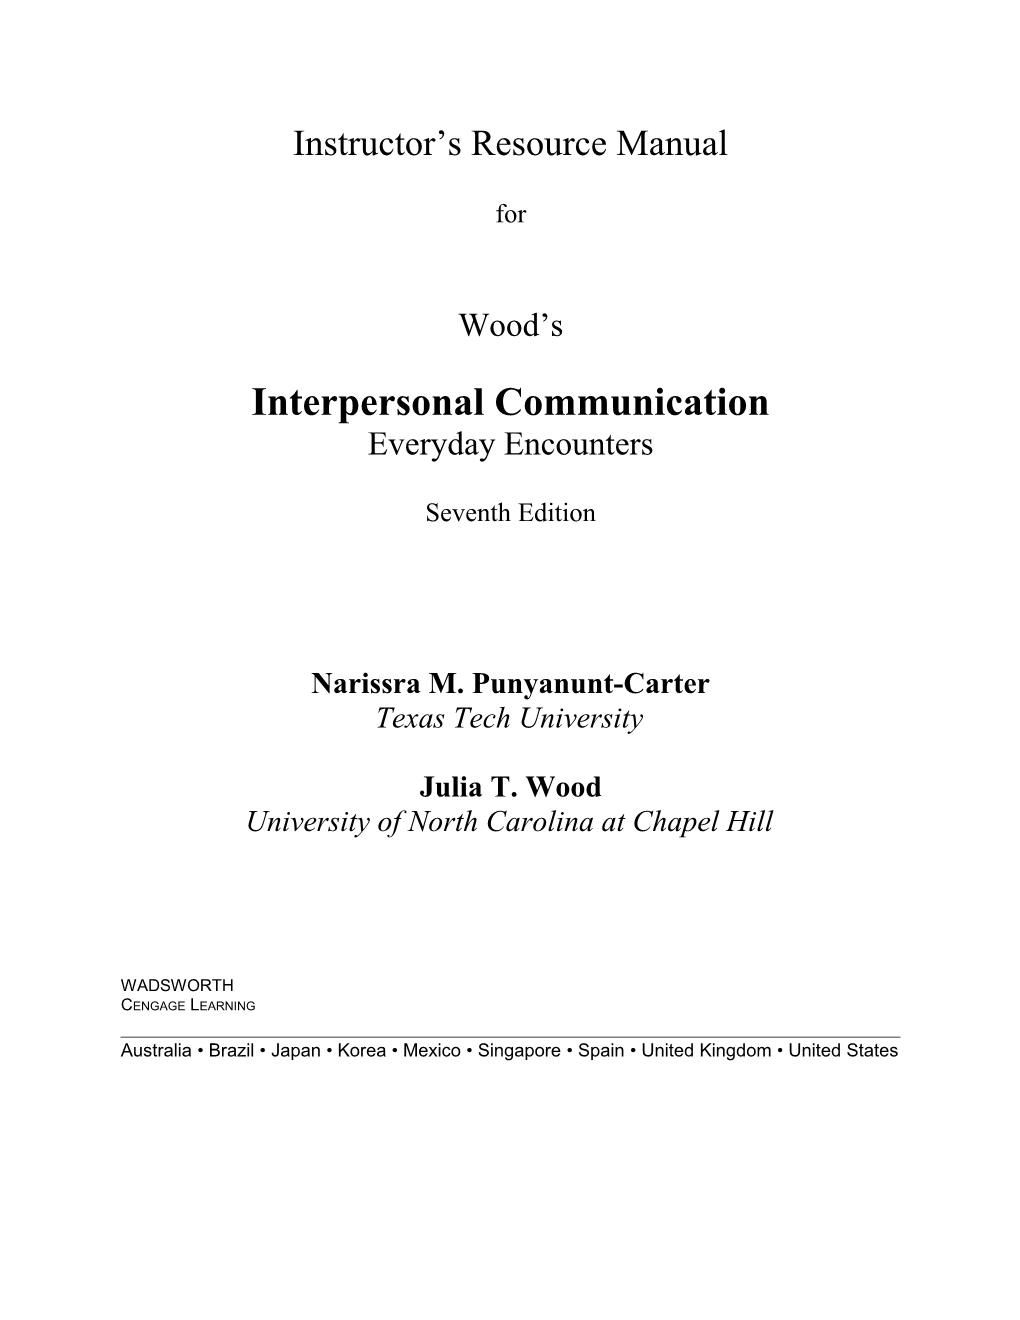 Interpersonal Communication s1